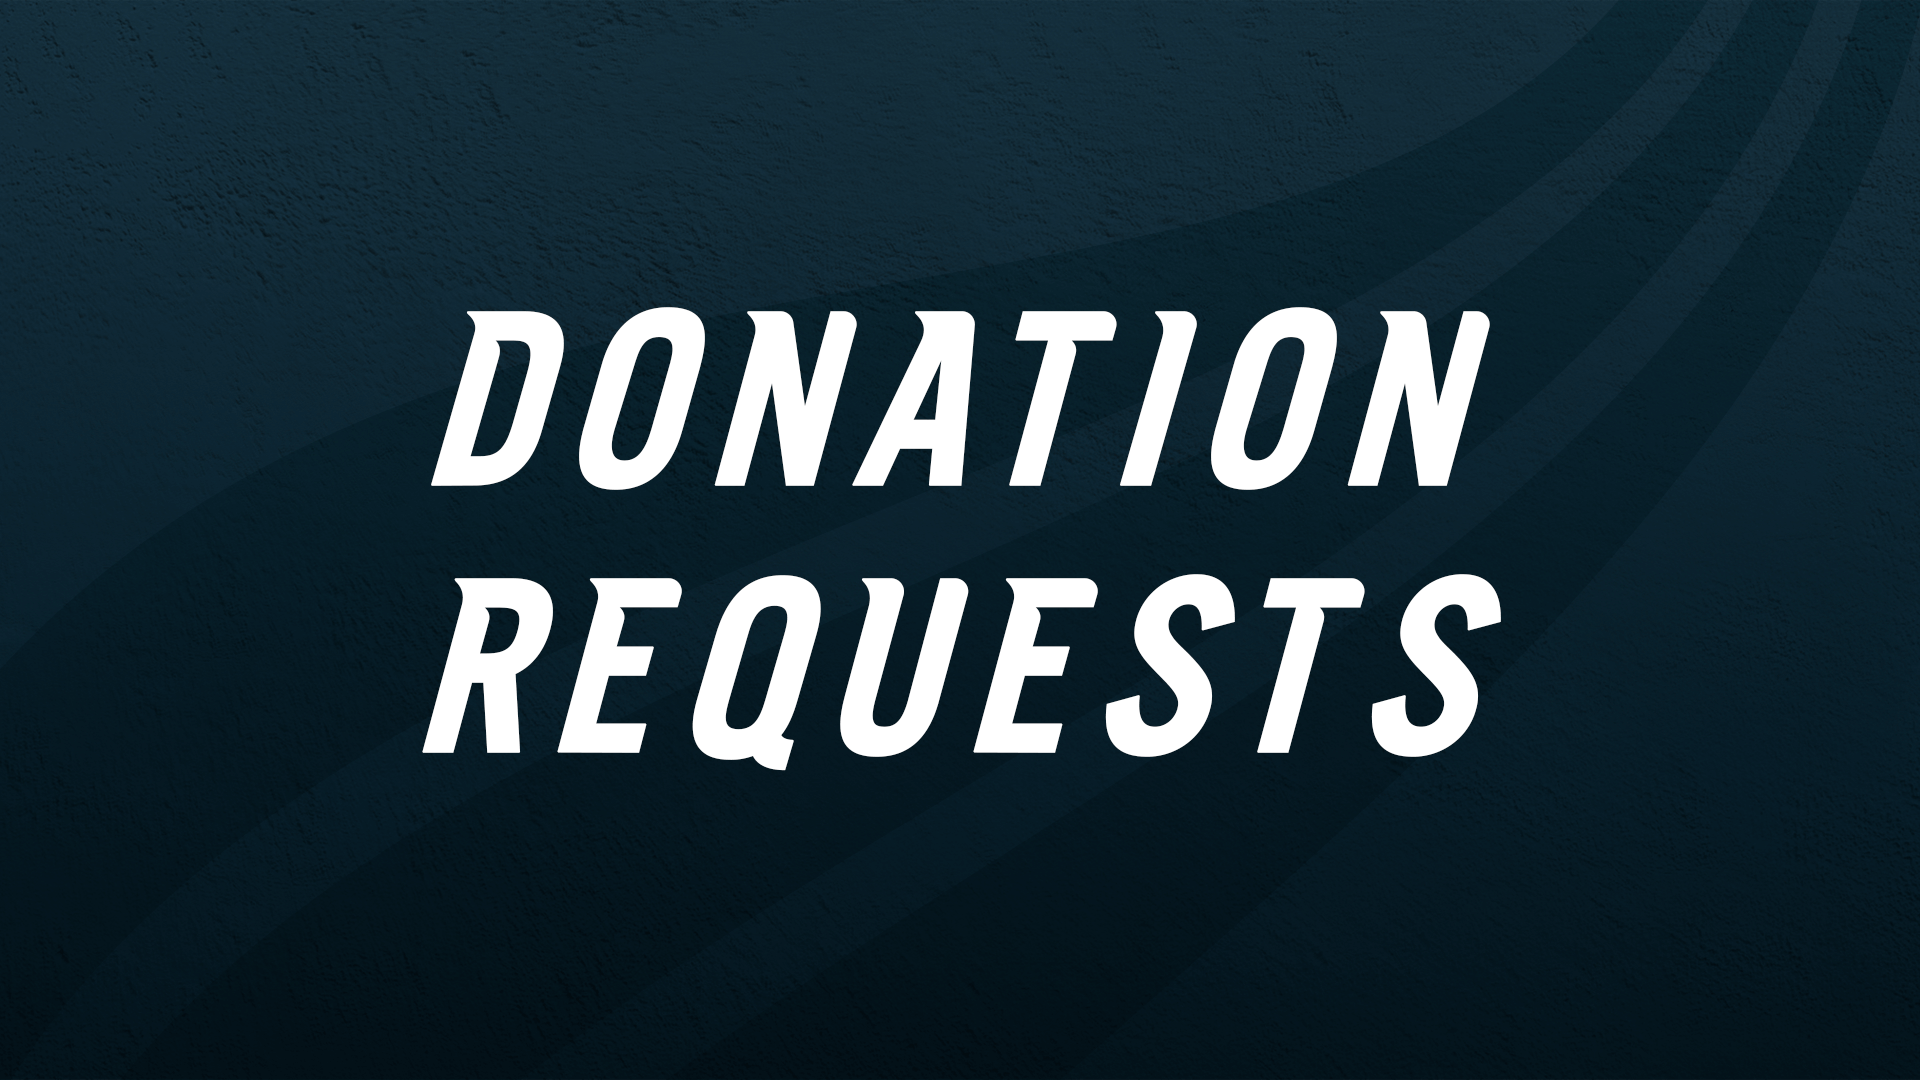 https://www.kansascitycurrent.com/donation-requests